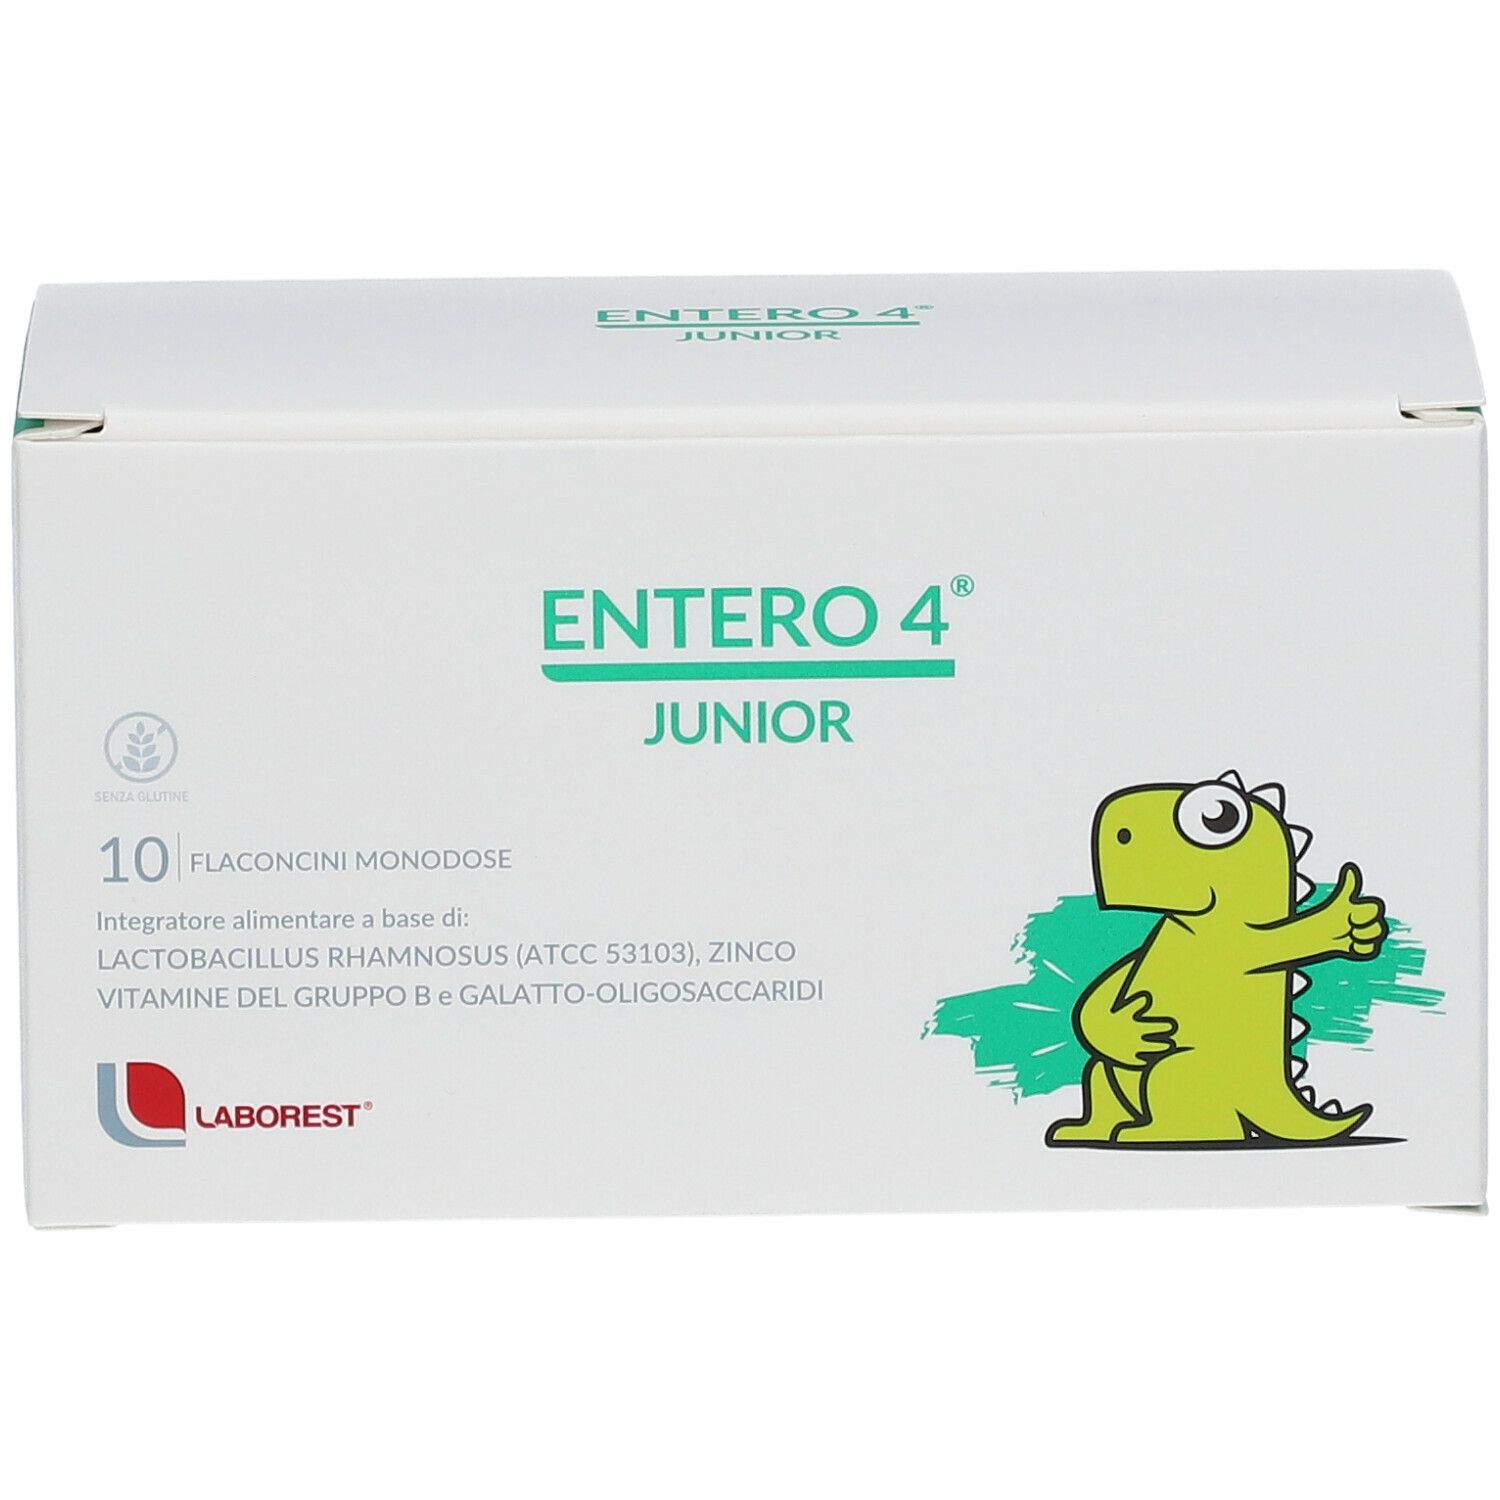 Entero 4® Junior